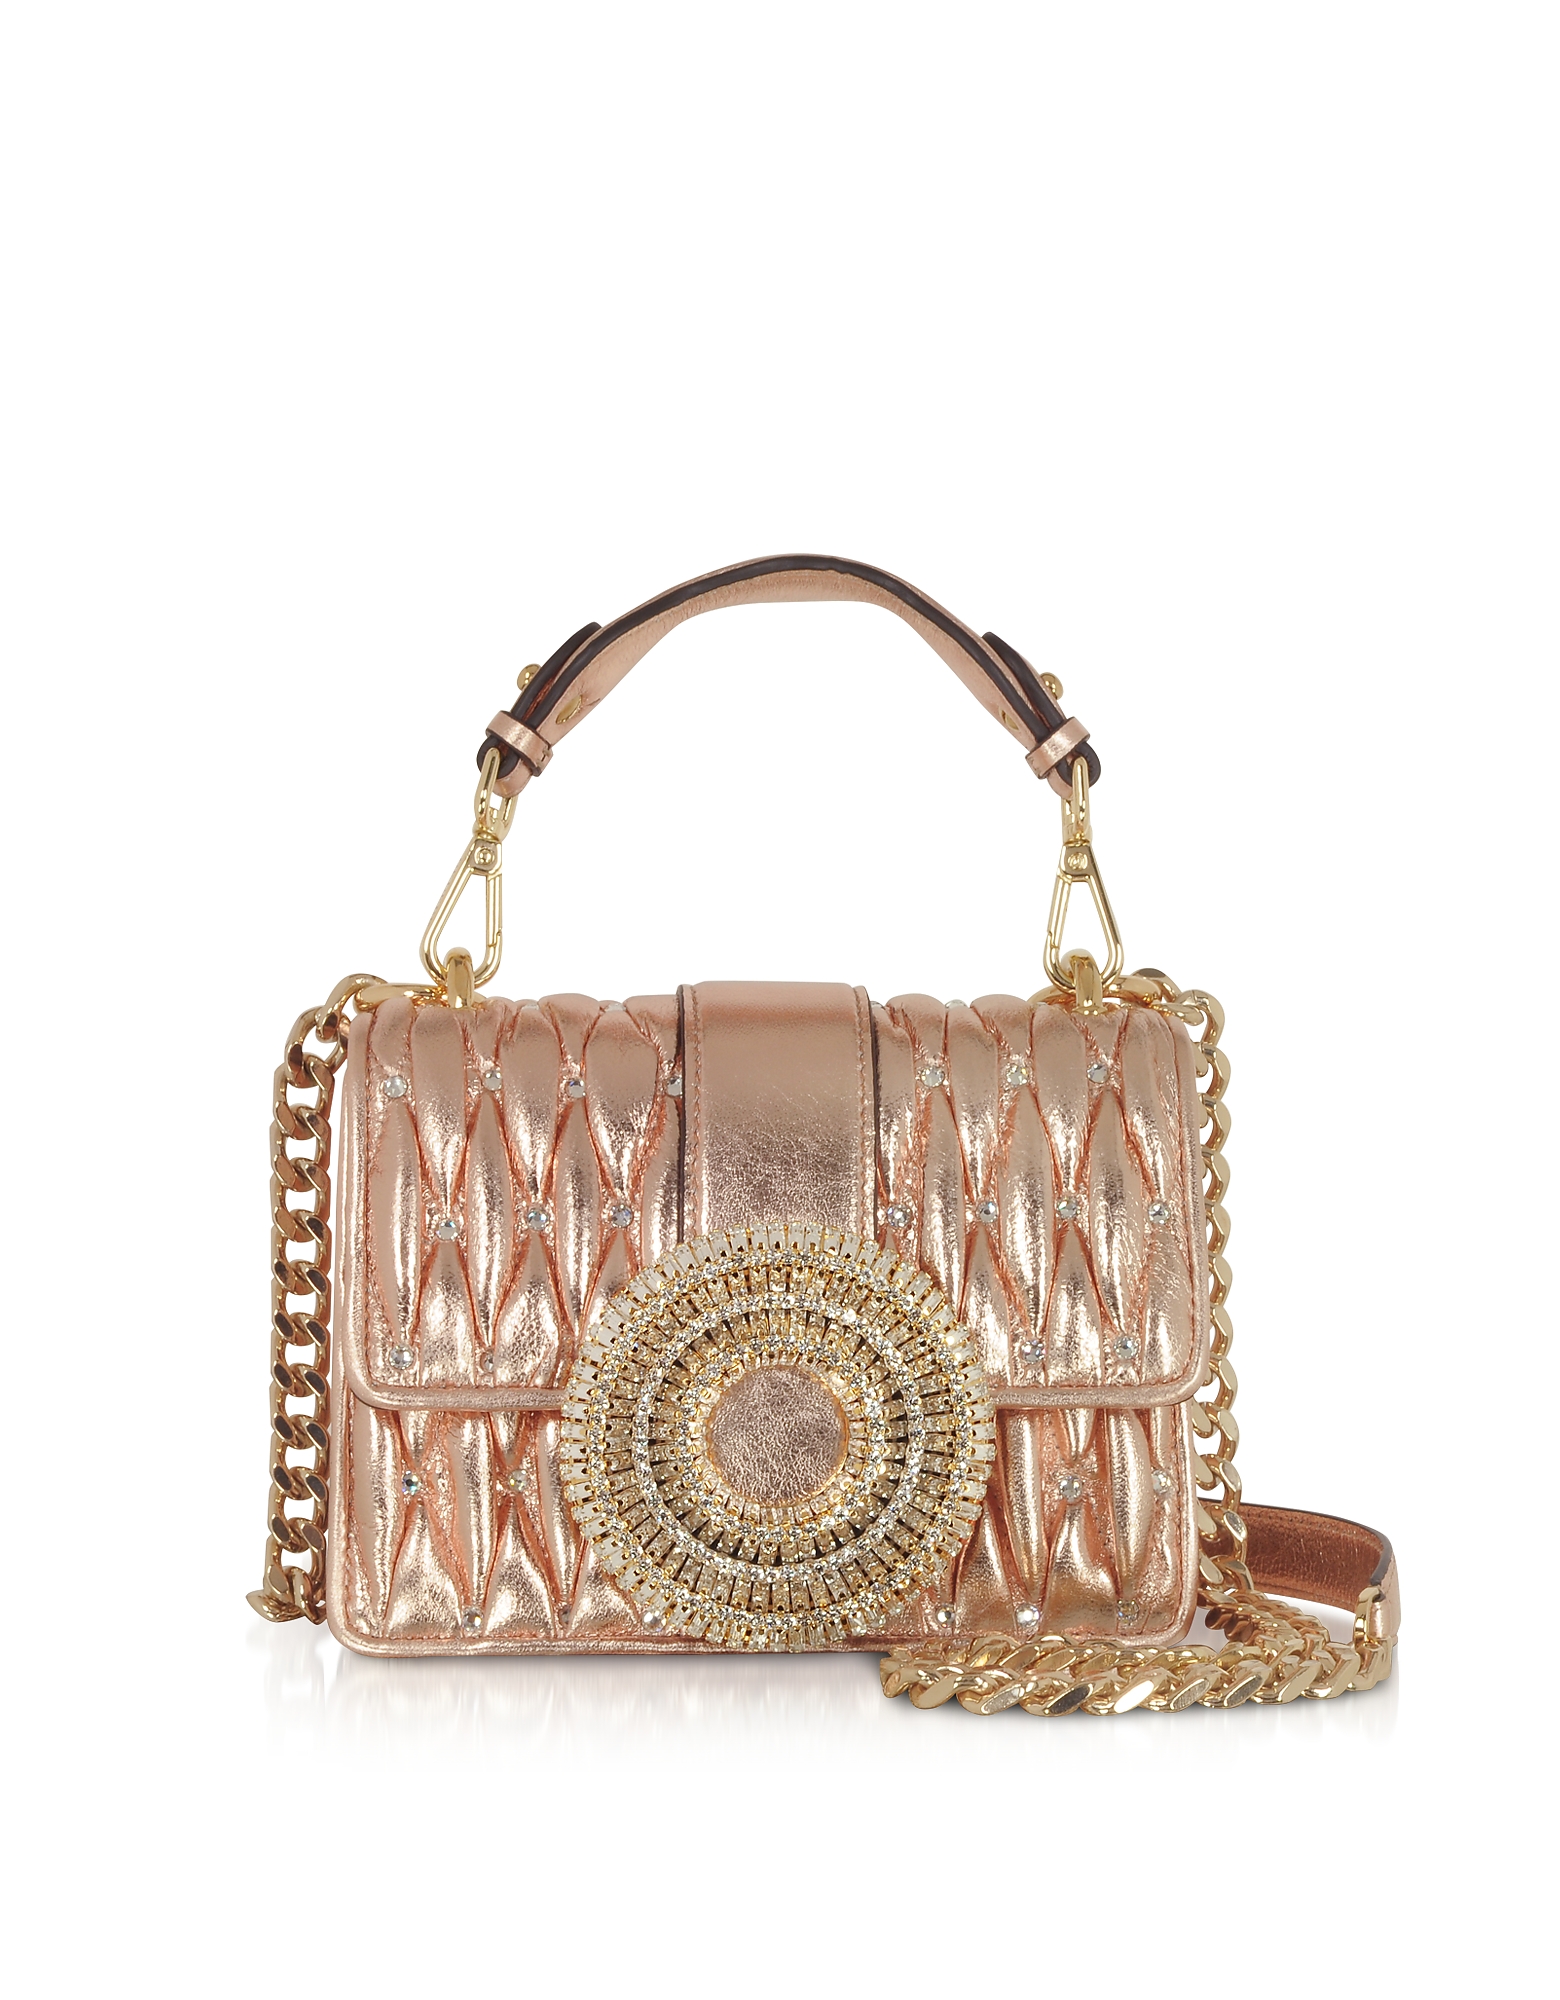 

Gio Small Rose Gold Leather & Crystal Handbag